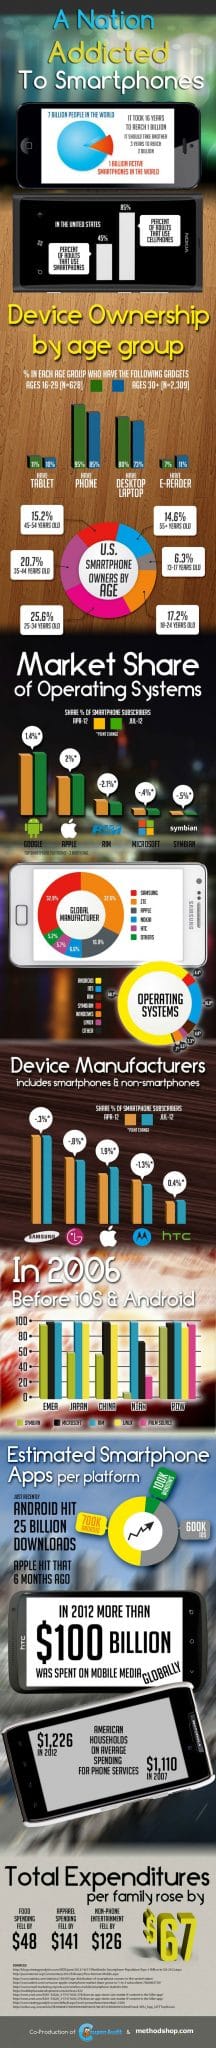 Infographic: America'S Addiction To Smartphones